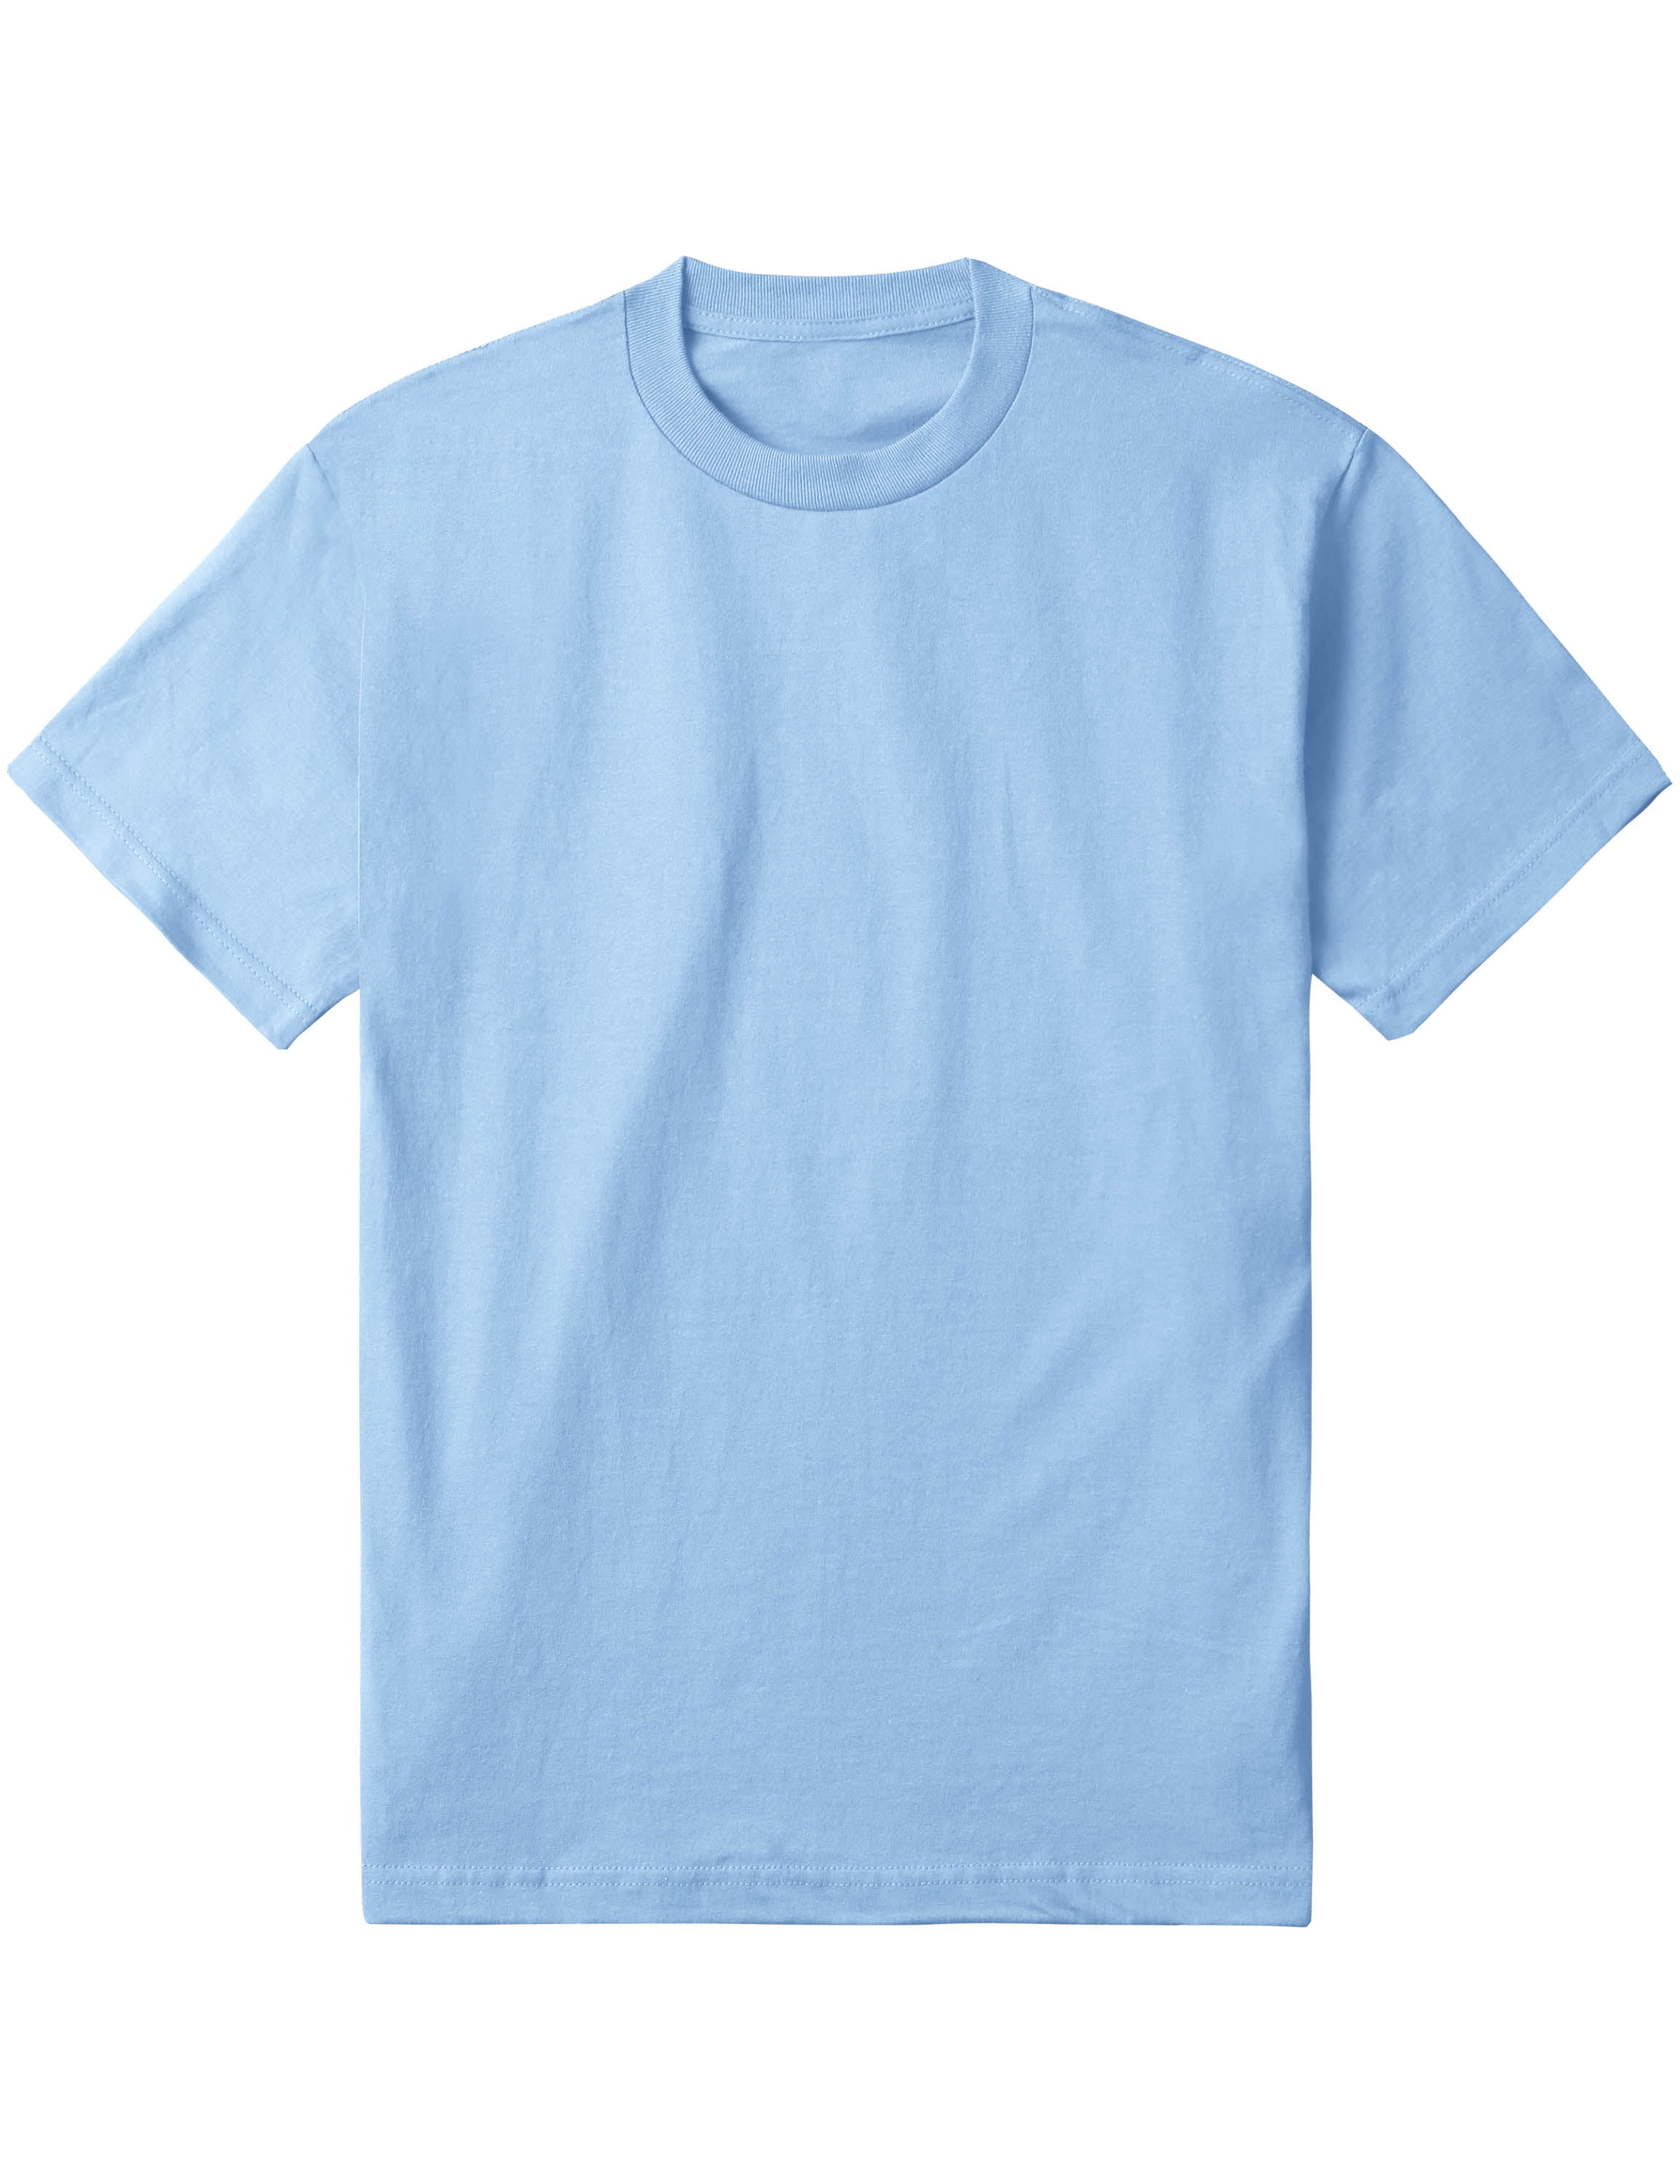 Hat and Basic Comfort Solid Plain Crew Neck T-Shirts - Walmart.com